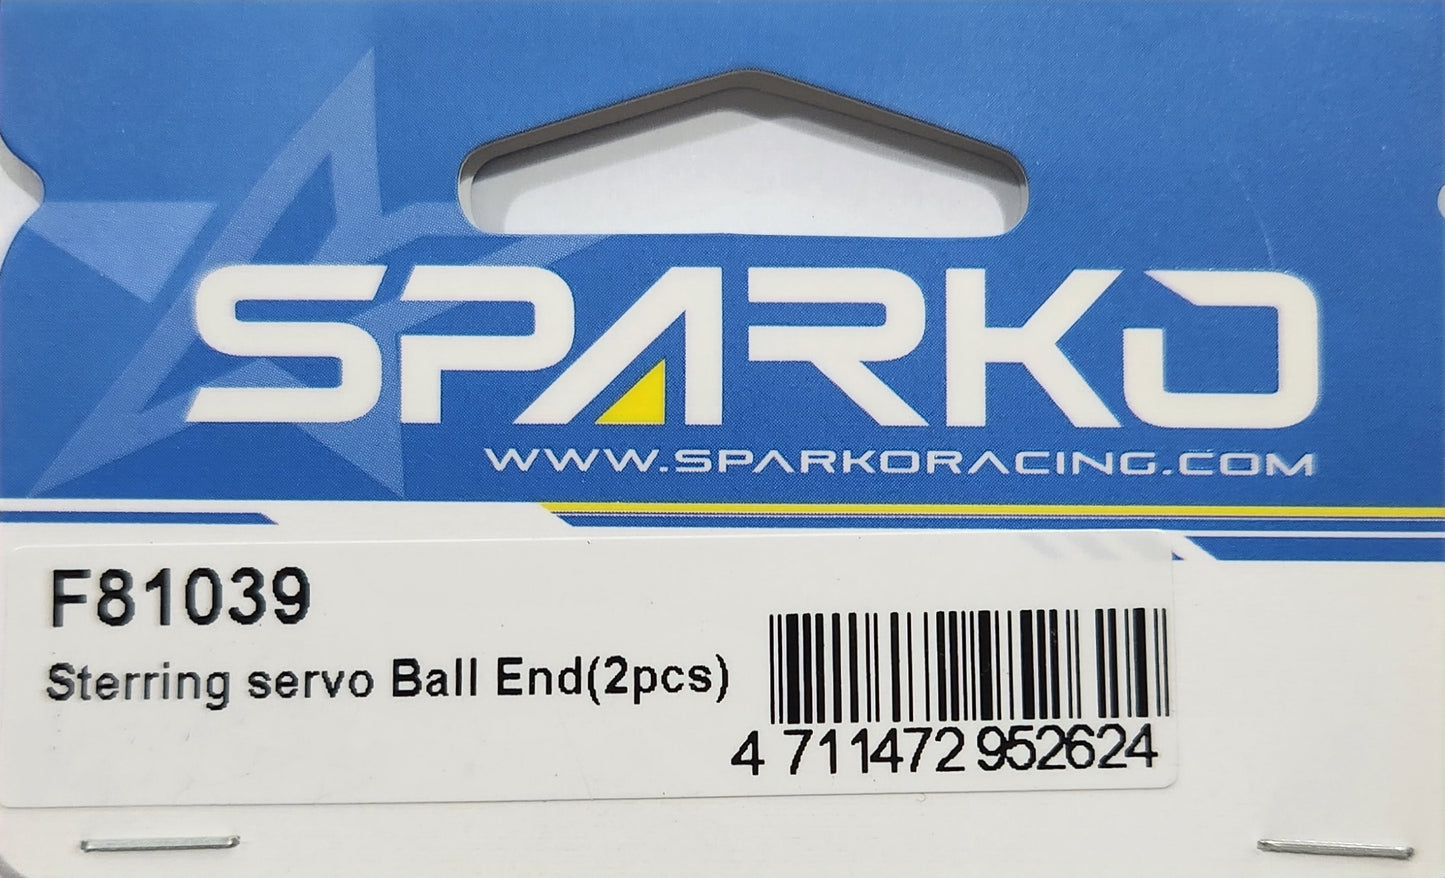 Sparko Racing Sterring servo Ball End (2pcs)